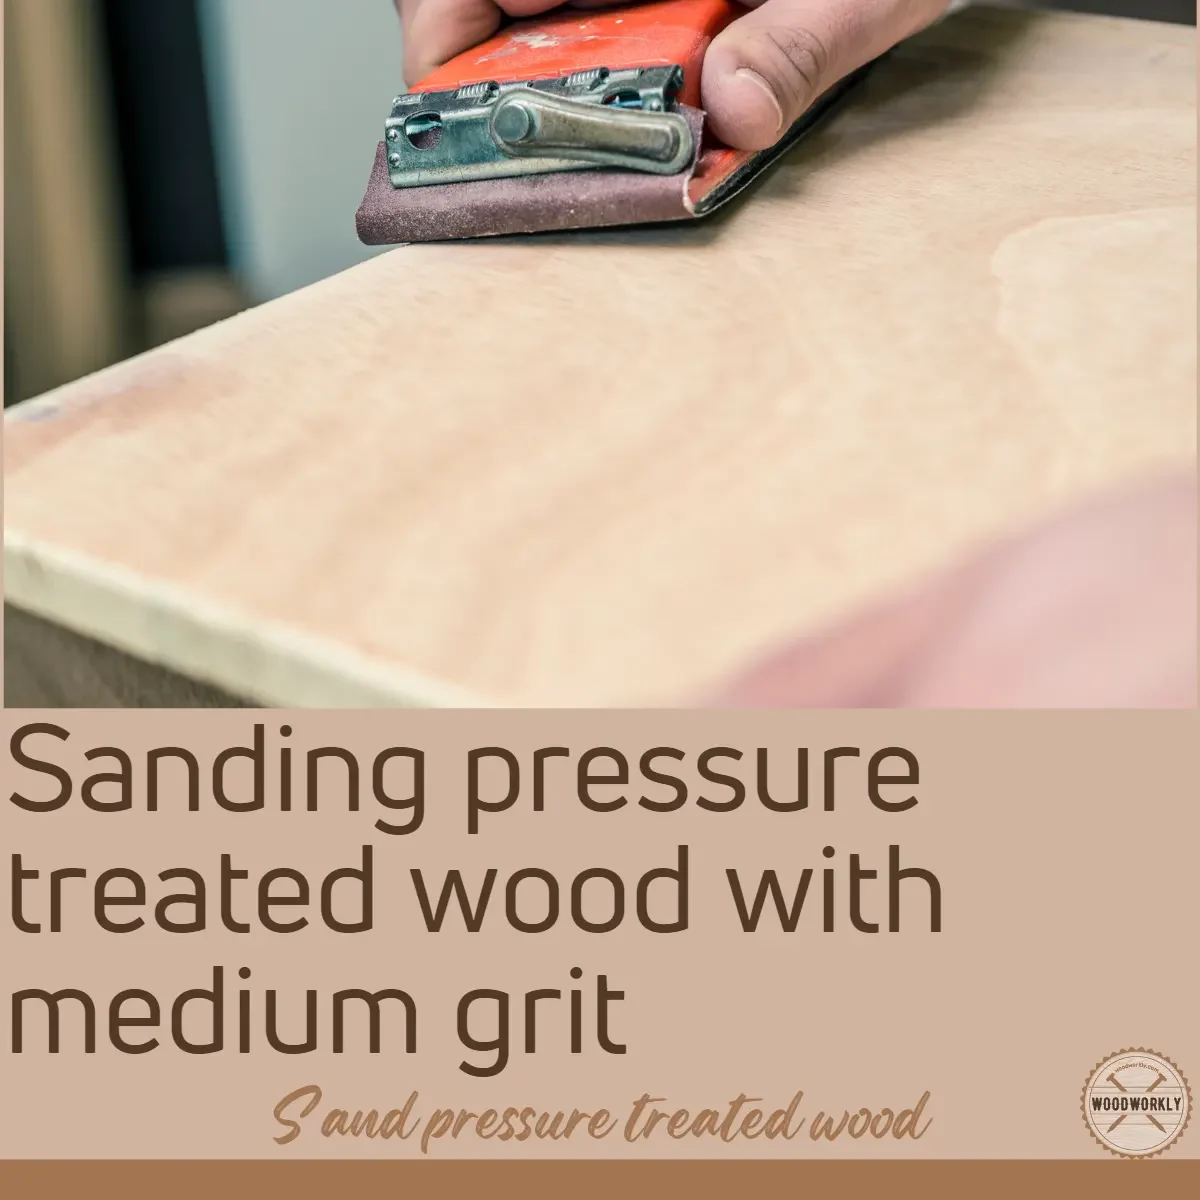 Sanding pressure treated wood with medium grit